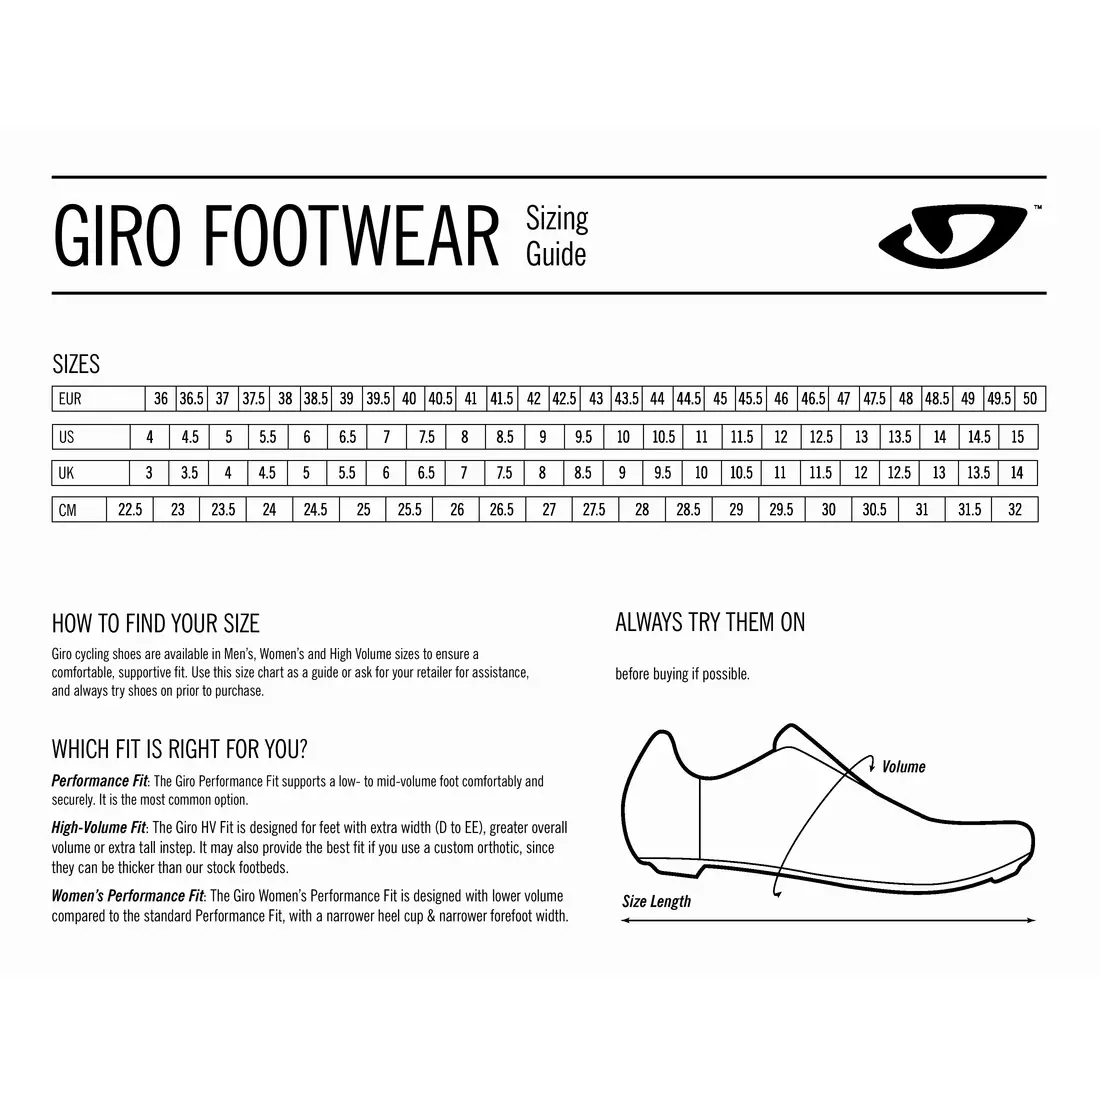 Pantofi de ciclism pentru bărbați GIRO REPUBLIC LX R REFLECTIVE dark shadow 